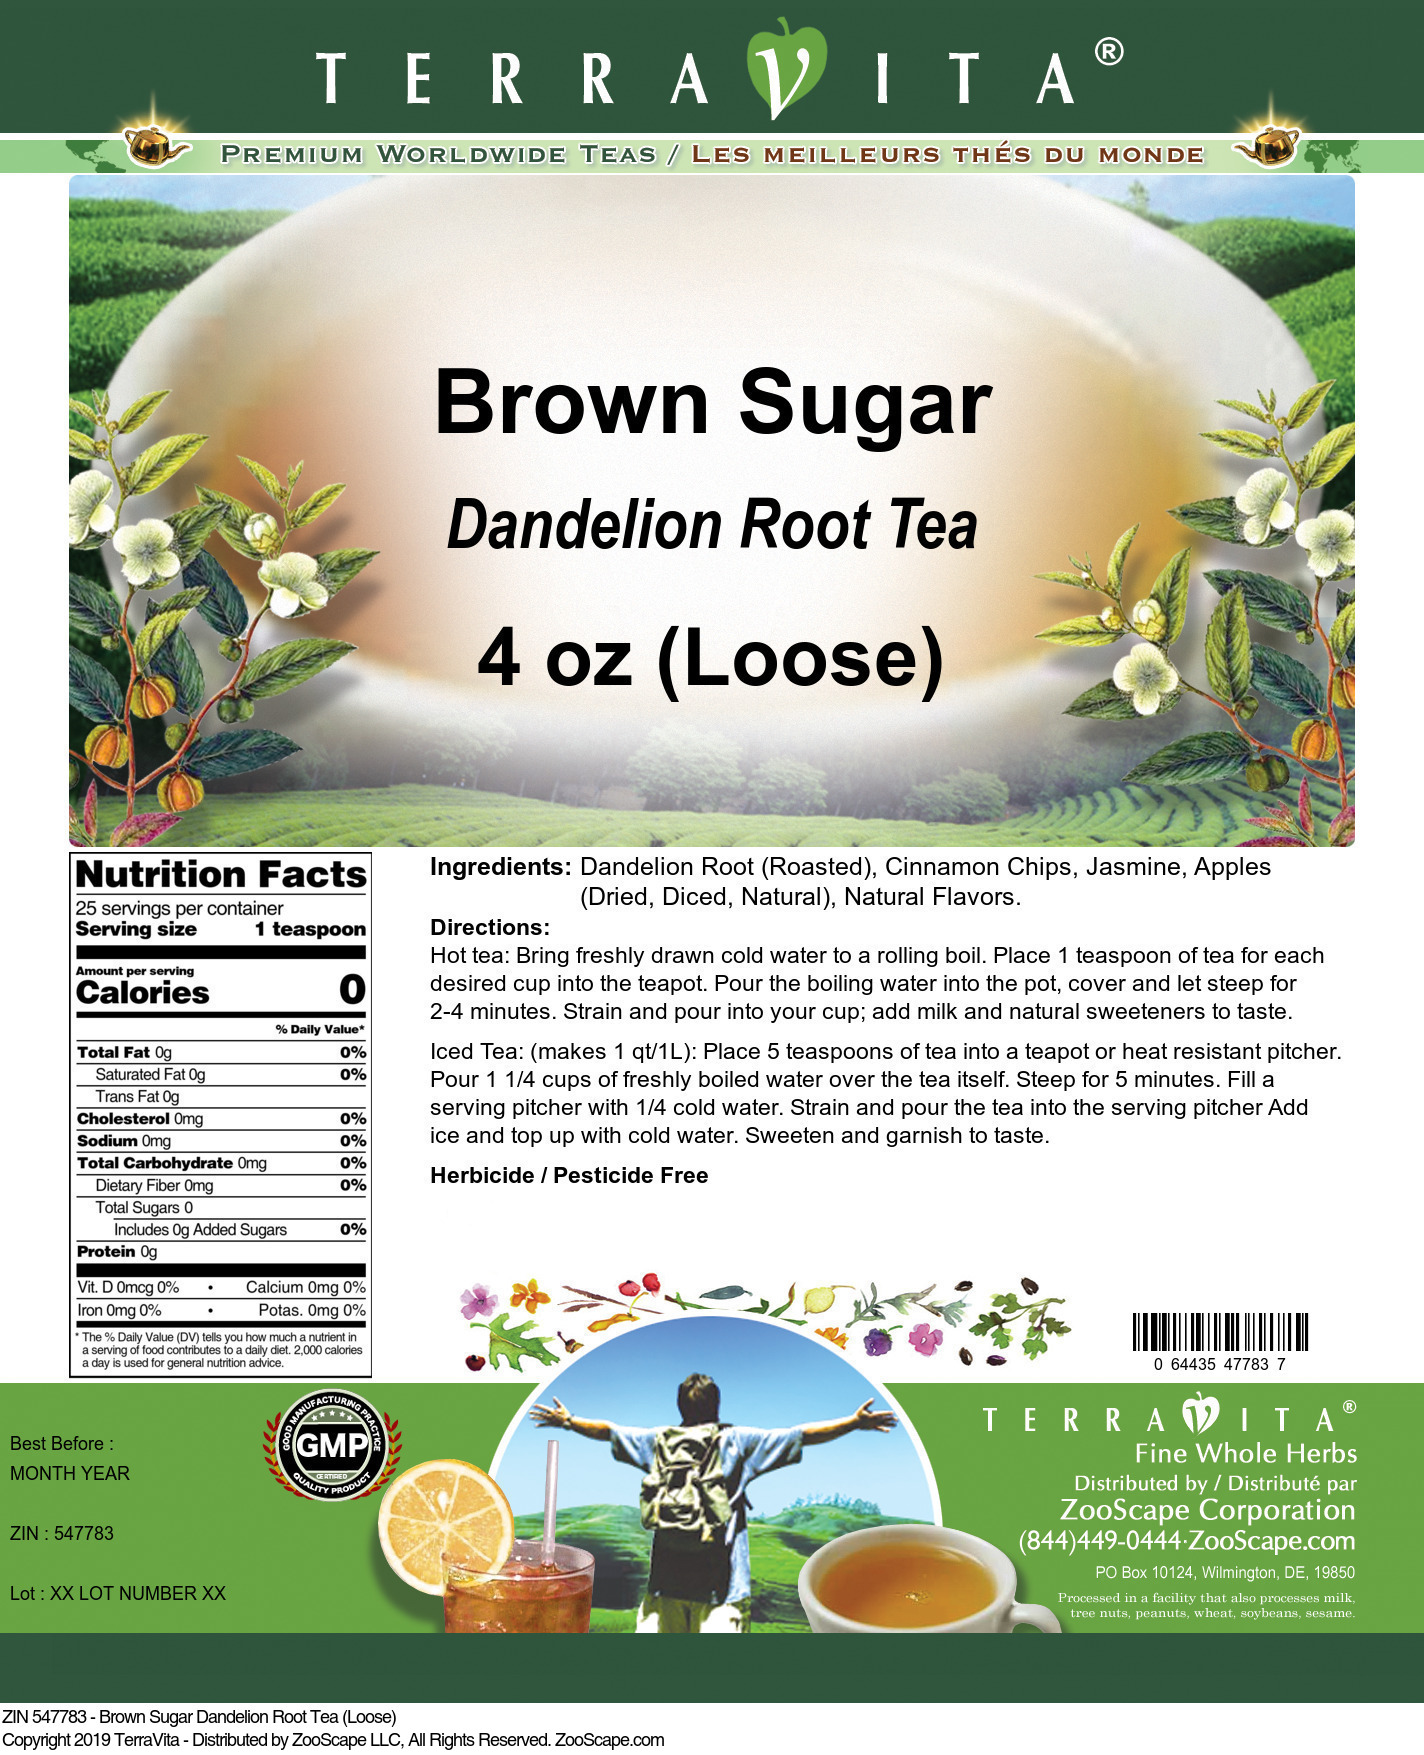 Brown Sugar Dandelion Root Tea (Loose) - Label